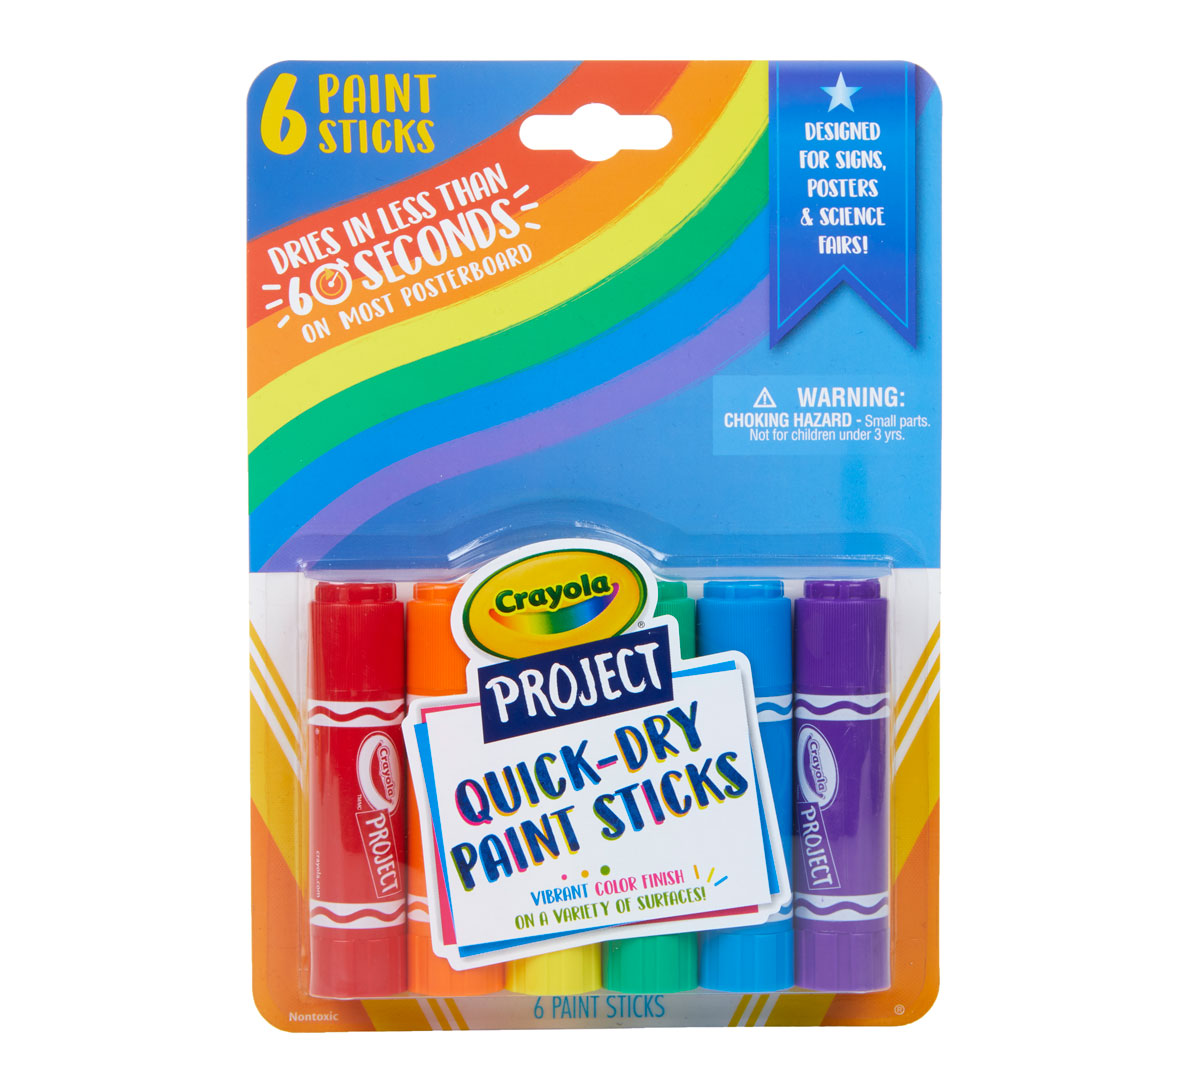 Non-toxic Bath Crayons for Children in Bulk 